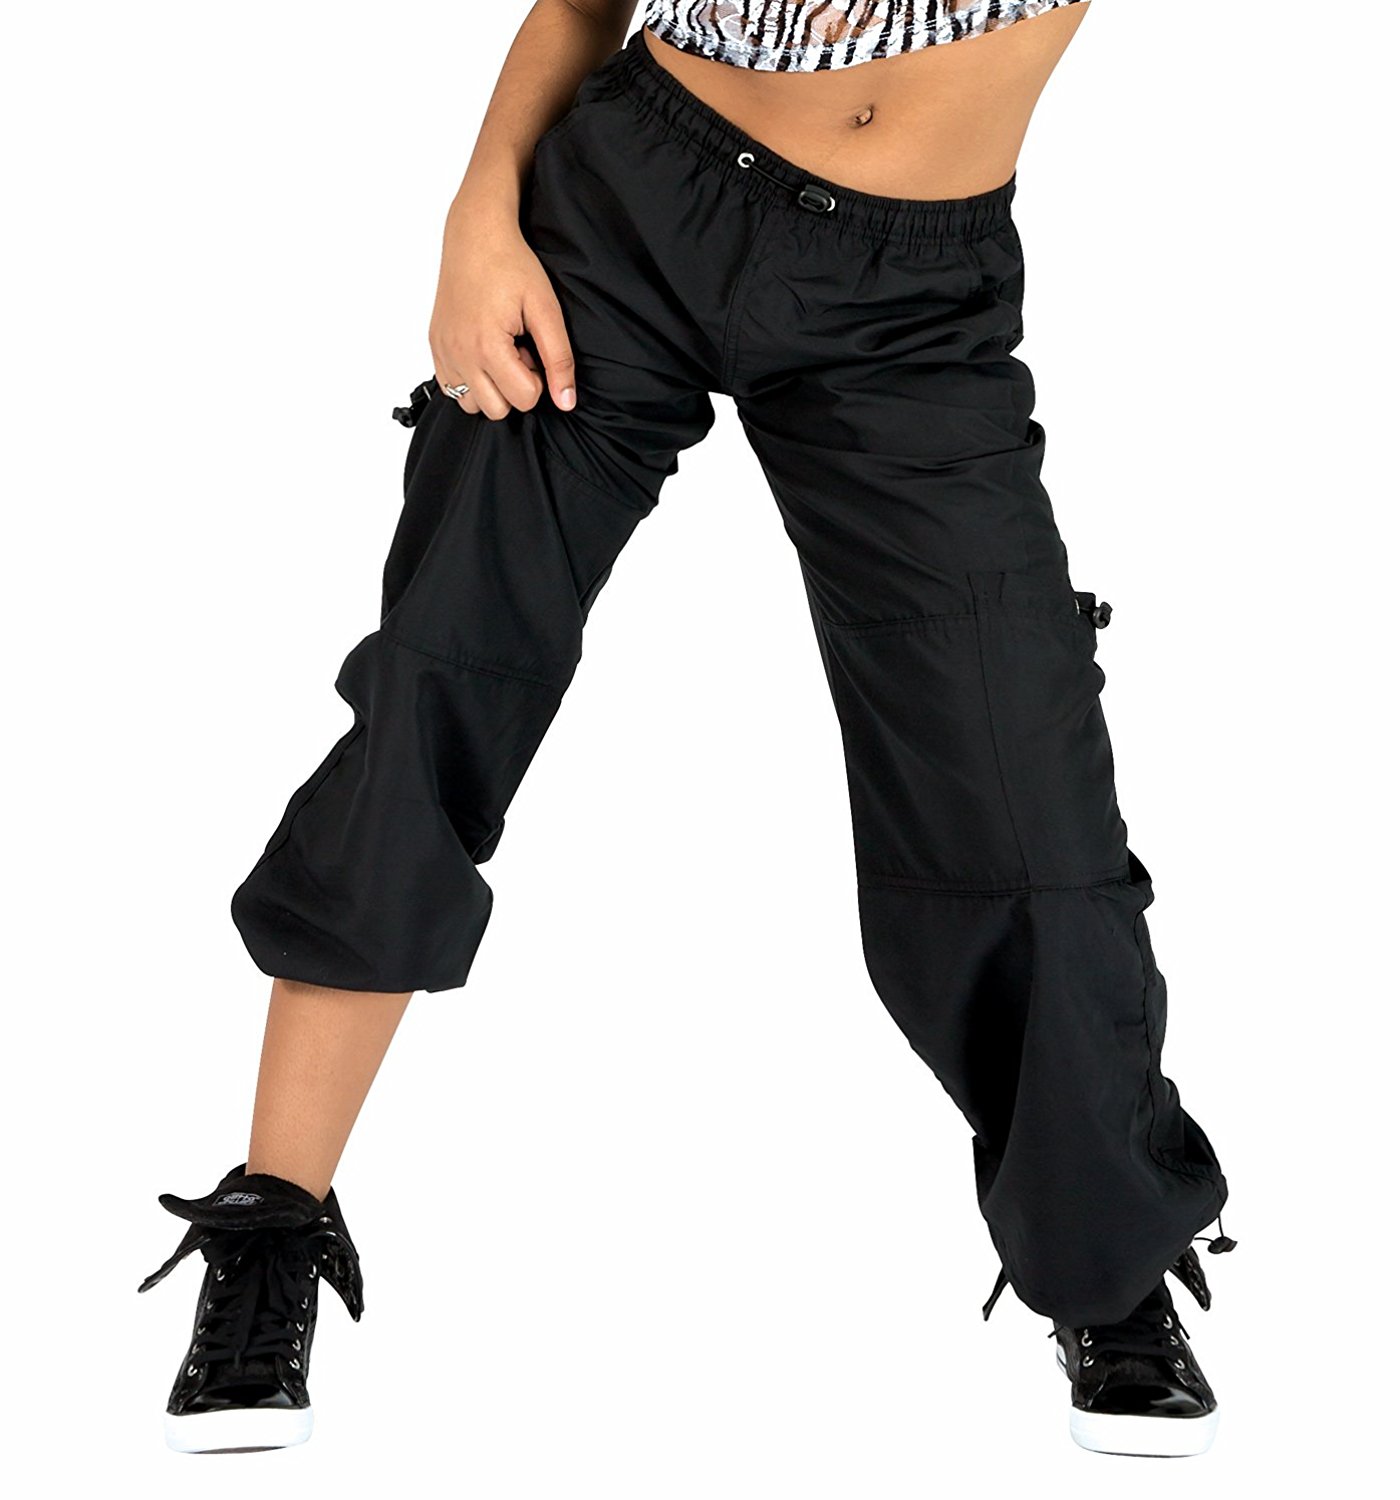 dance pants adult unisex cargo pants with drawstring waist,bp104 QOVUTXD